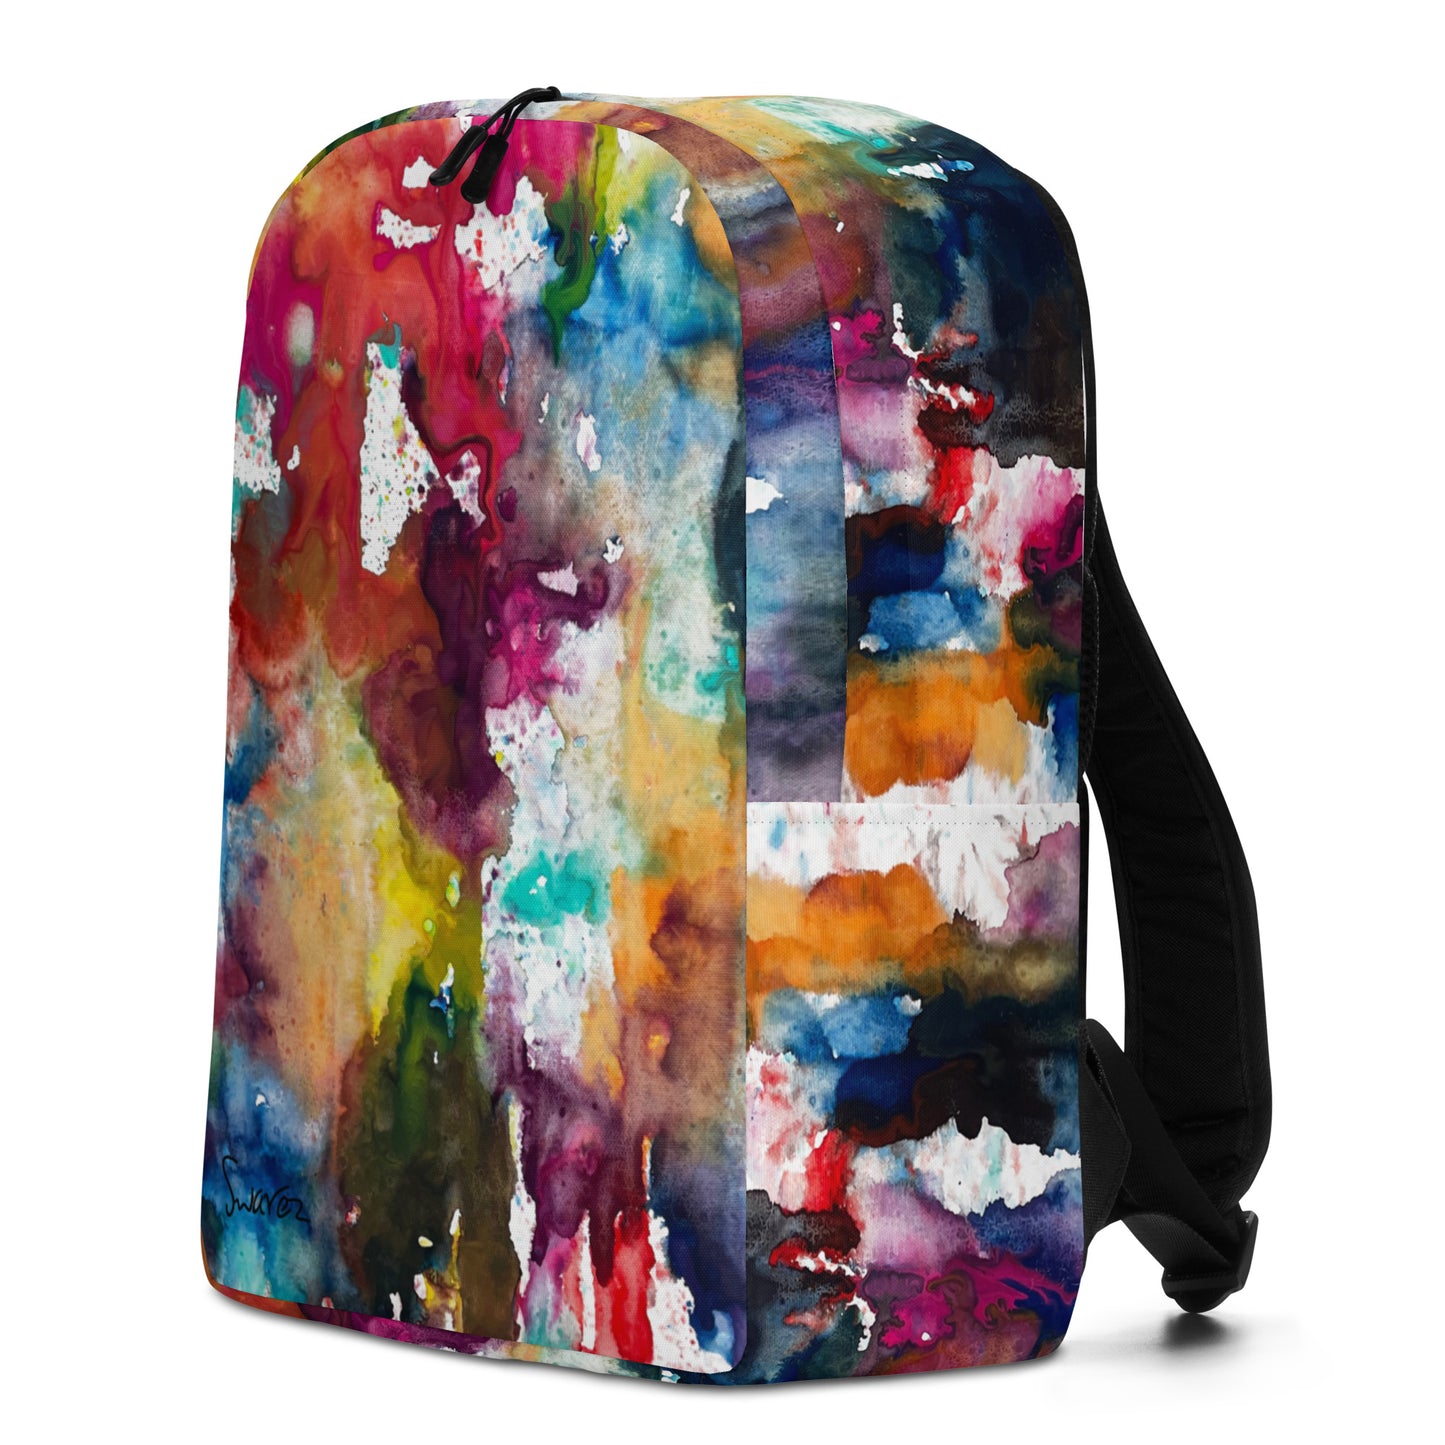 Minimalist Backpack - Dawn Eclipse design